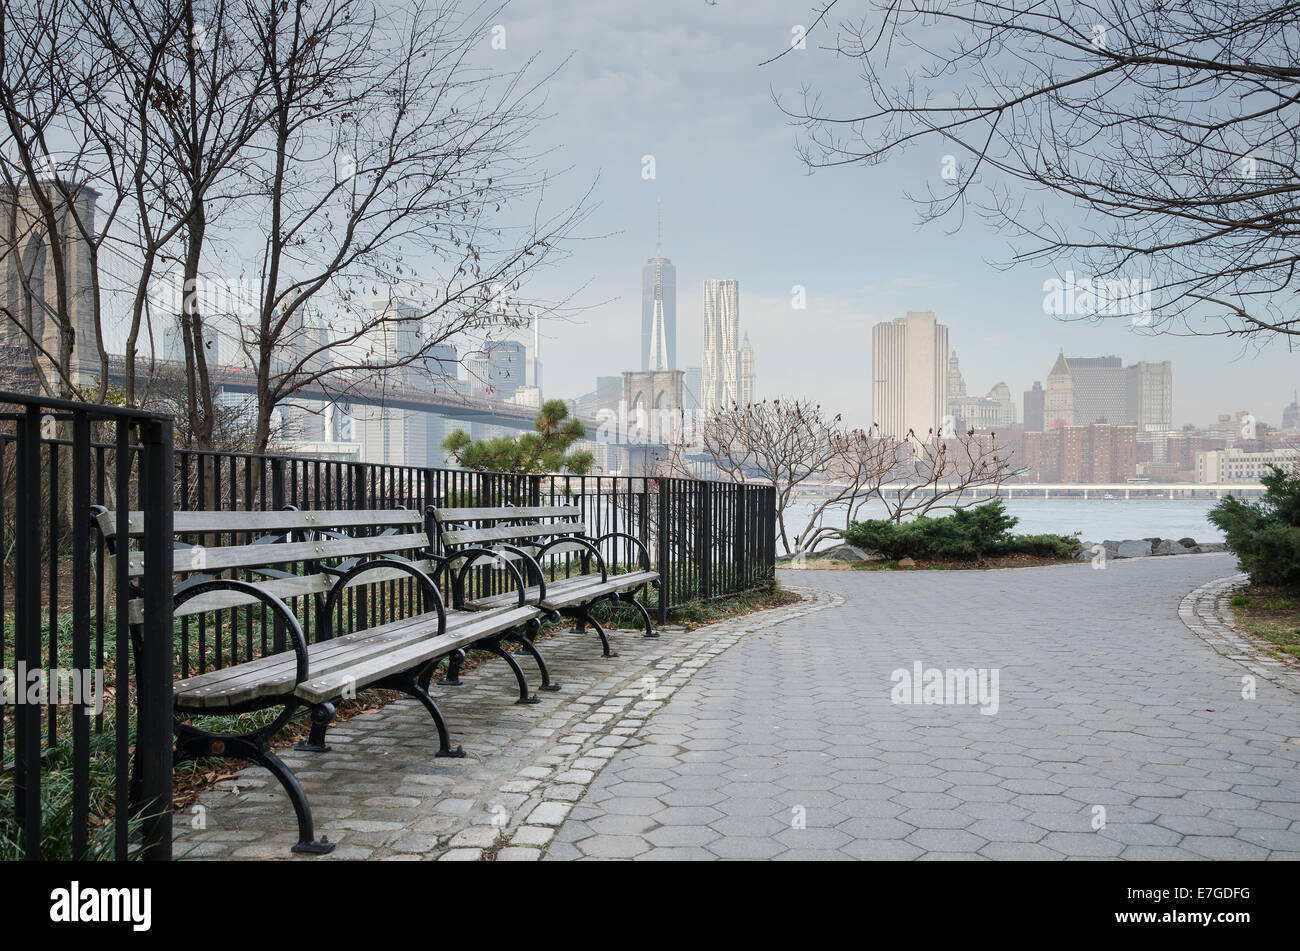 Pont de Brooklyn banc de parc et promenade avec des toits de Manhattan. Banque D'Images